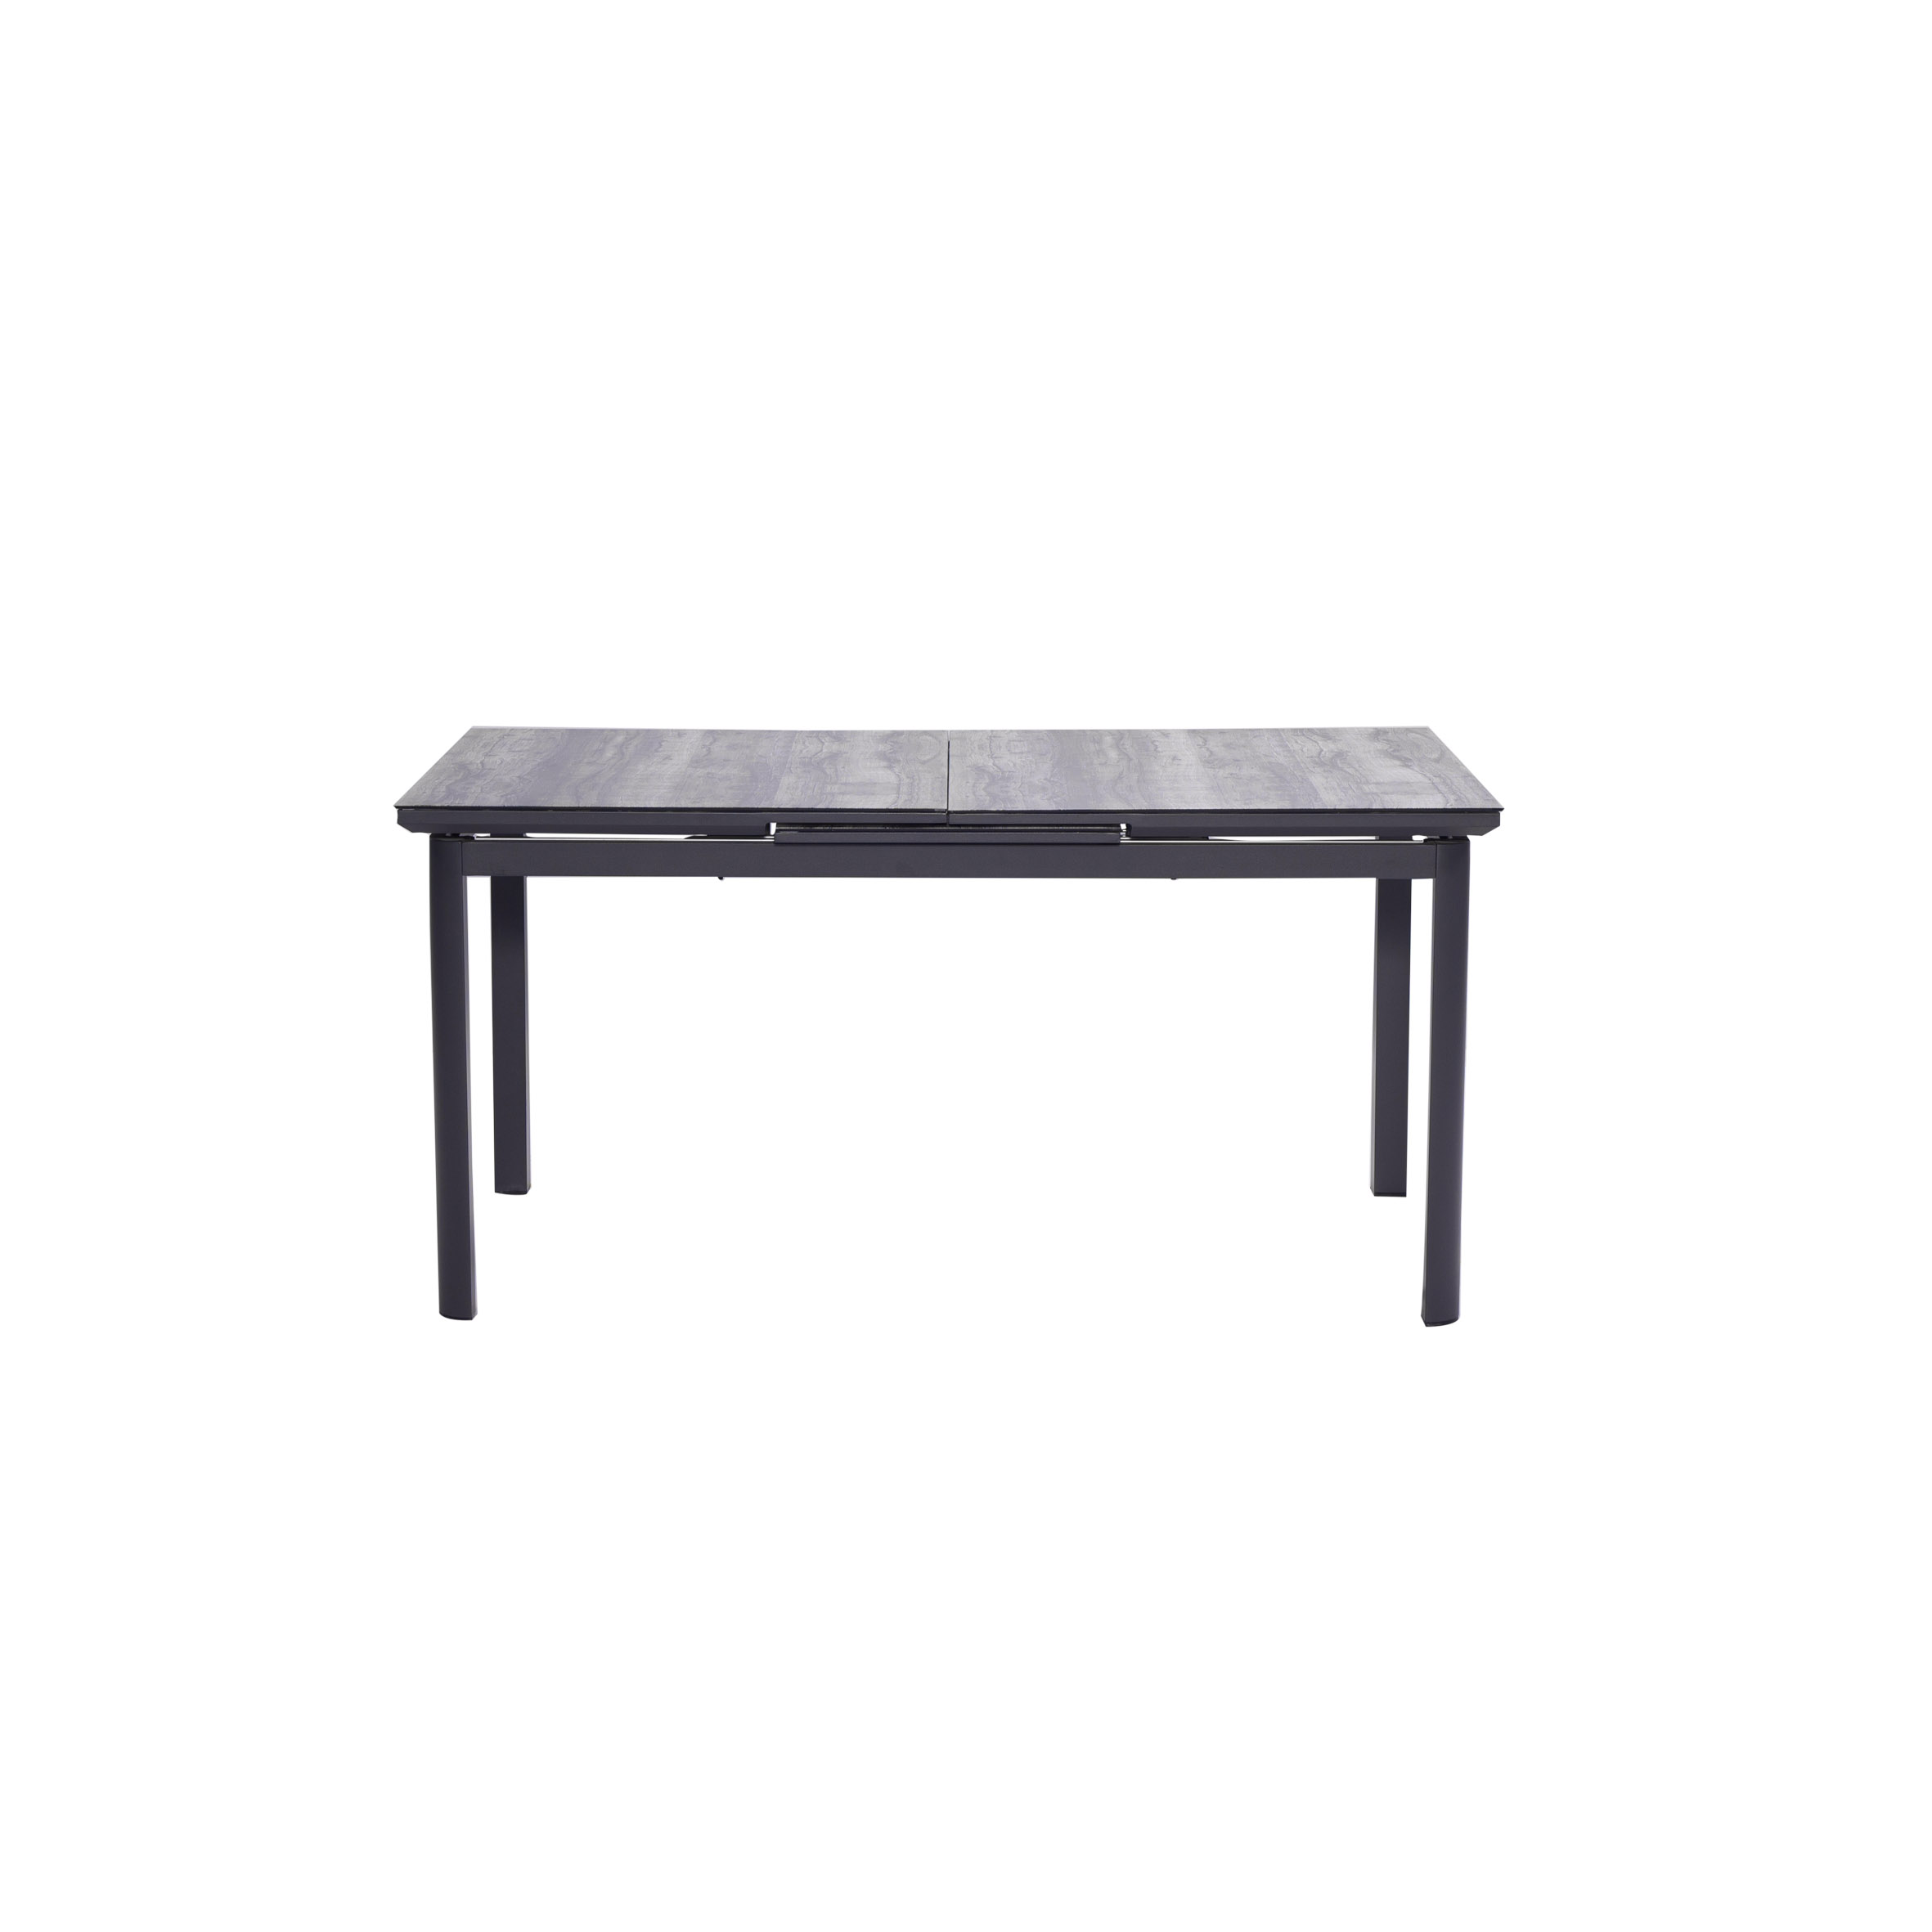 Santo extension table(Ceramic glass) S3